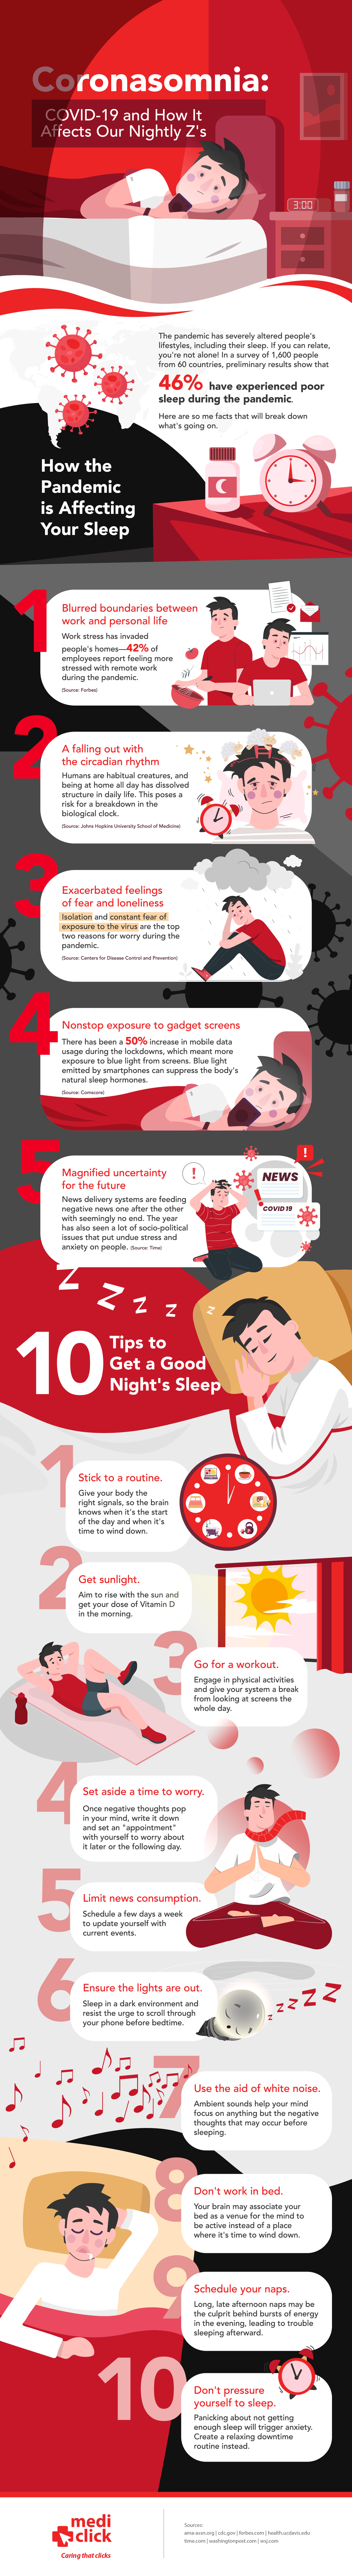 Original Source: https://mediclick.ph/blogs/articles/coronasomnia-how-covid19-affects-our-sleep